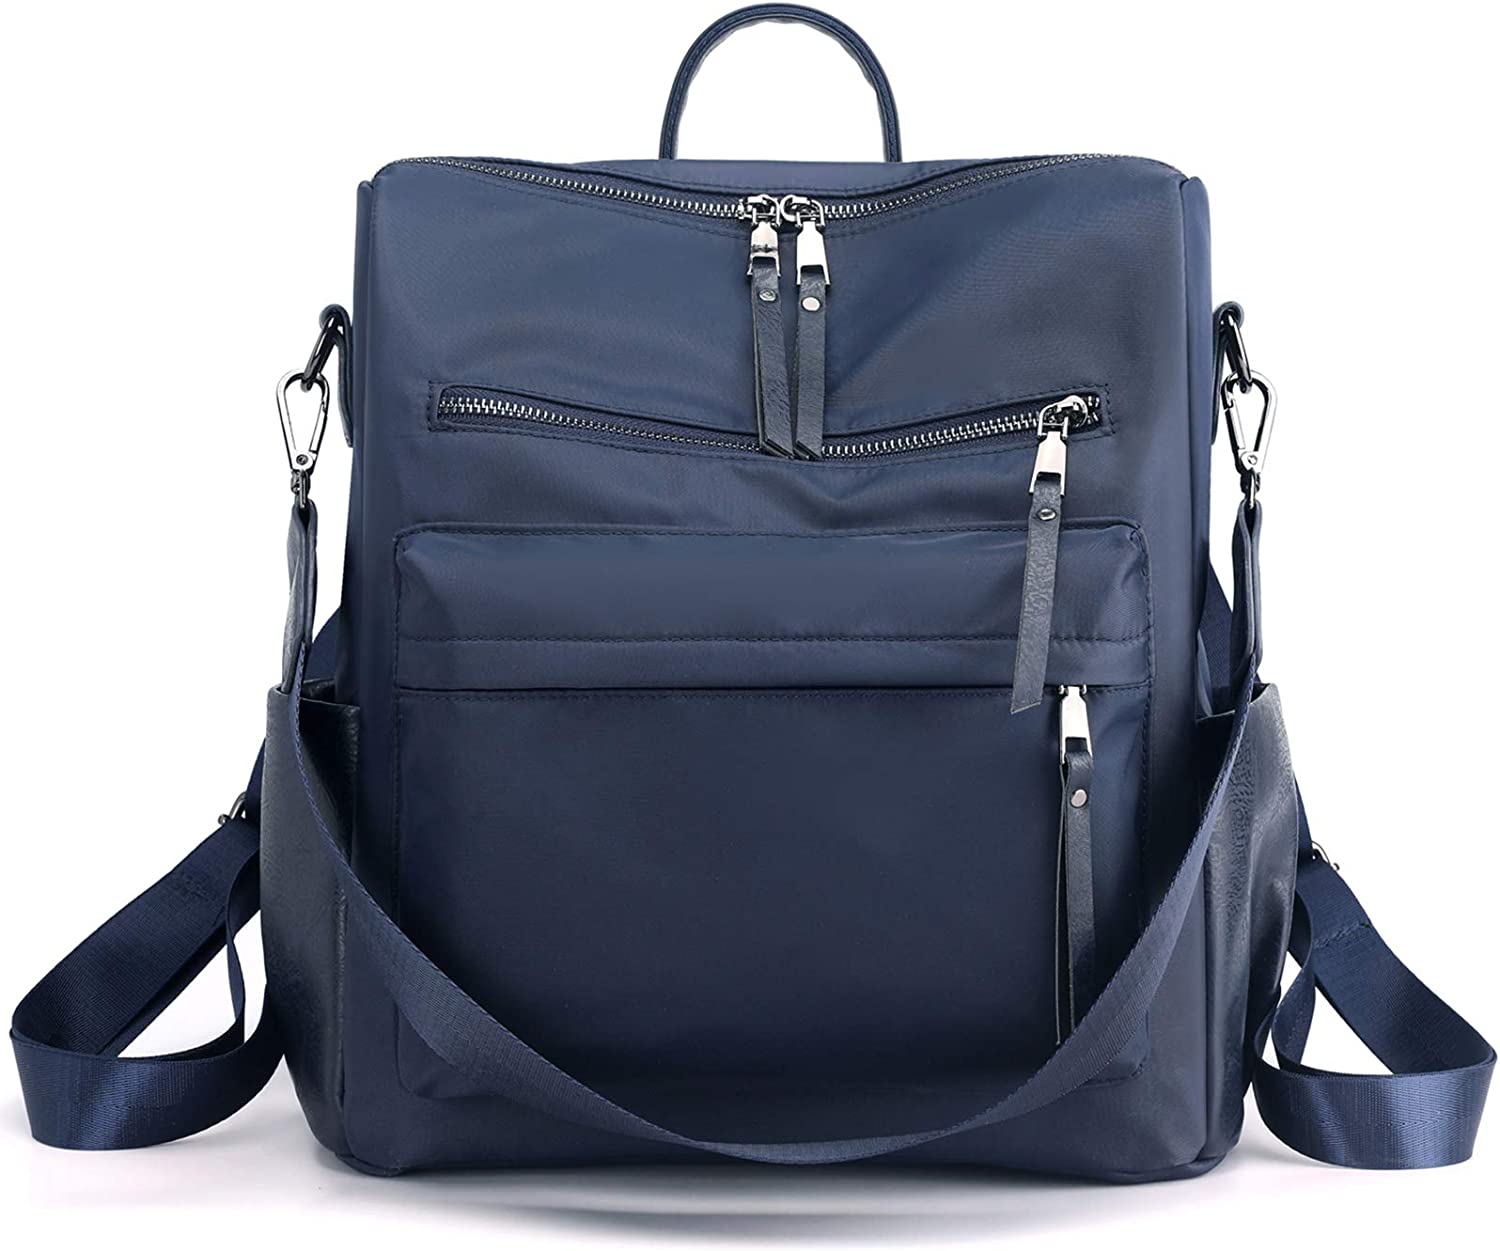 ZOCILOR Women's Fashion Backpack Purse Multipurpose Design Convertible  Satchel H